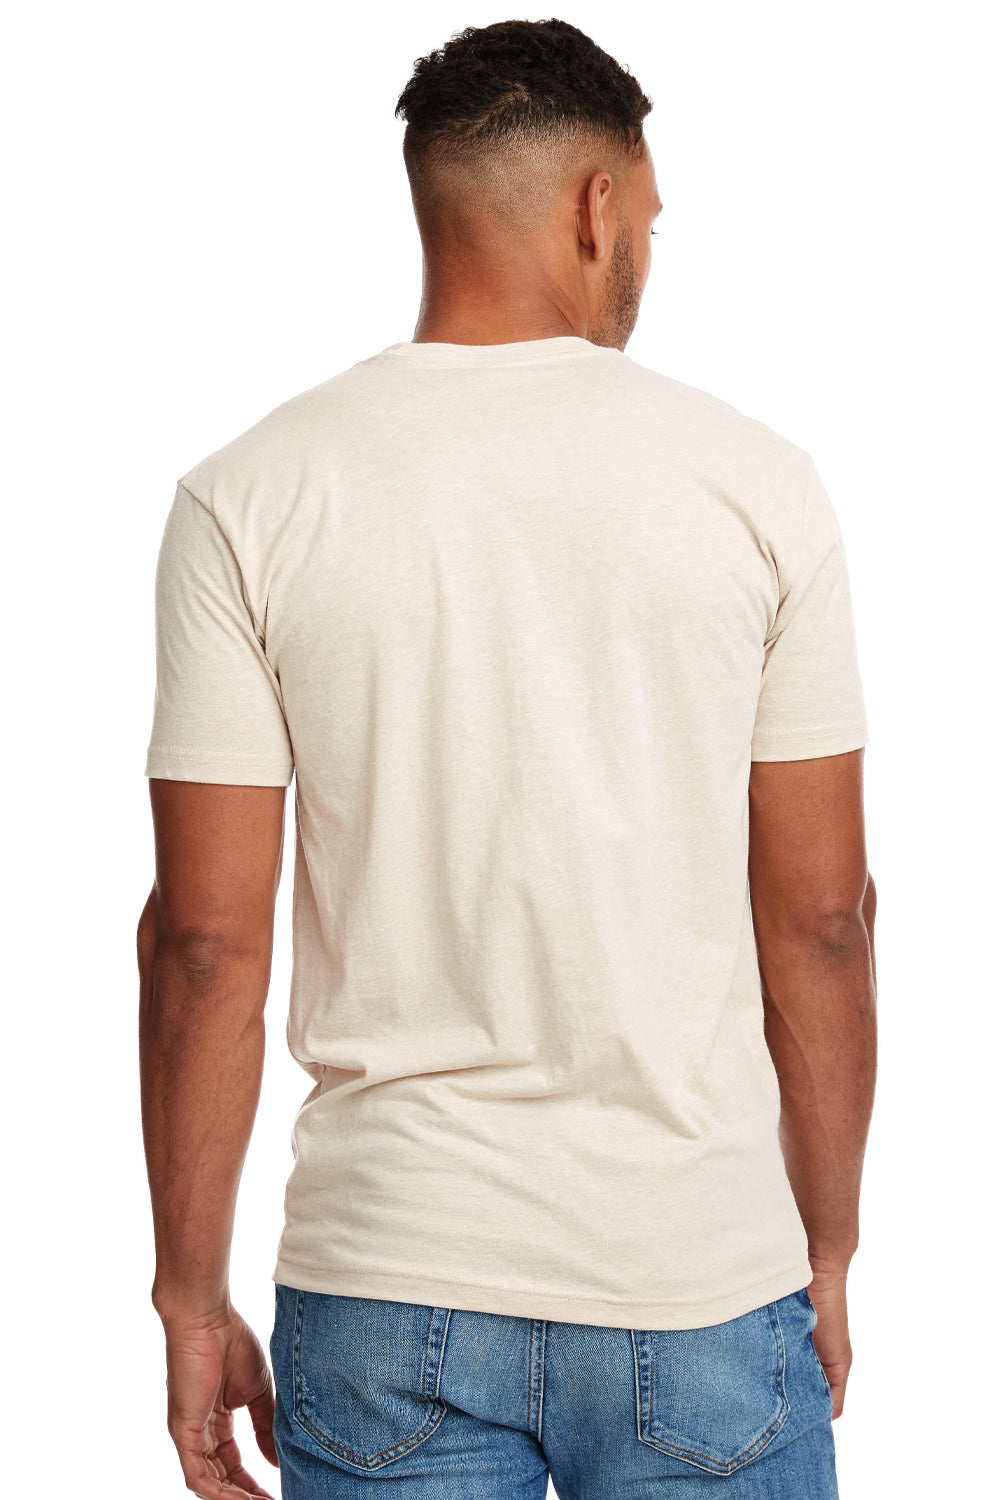 Next Level N6210 Mens CVC Jersey Short Sleeve Crewneck T-Shirt Cream Back